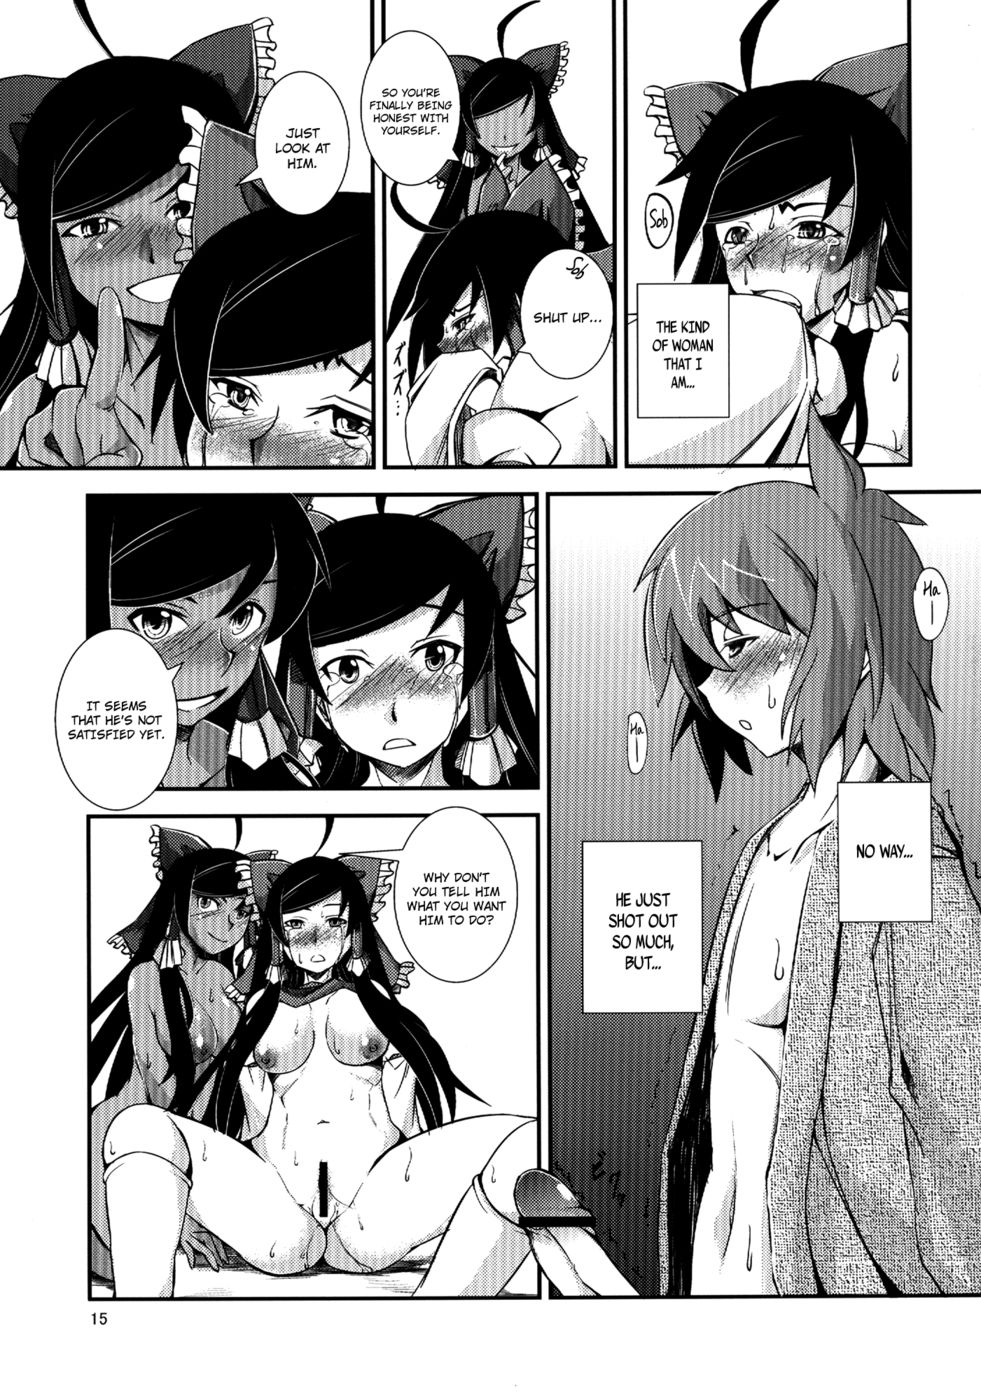 Hentai Manga Comic-The Incident of the Black Shrine Maiden-Chapter 3-13